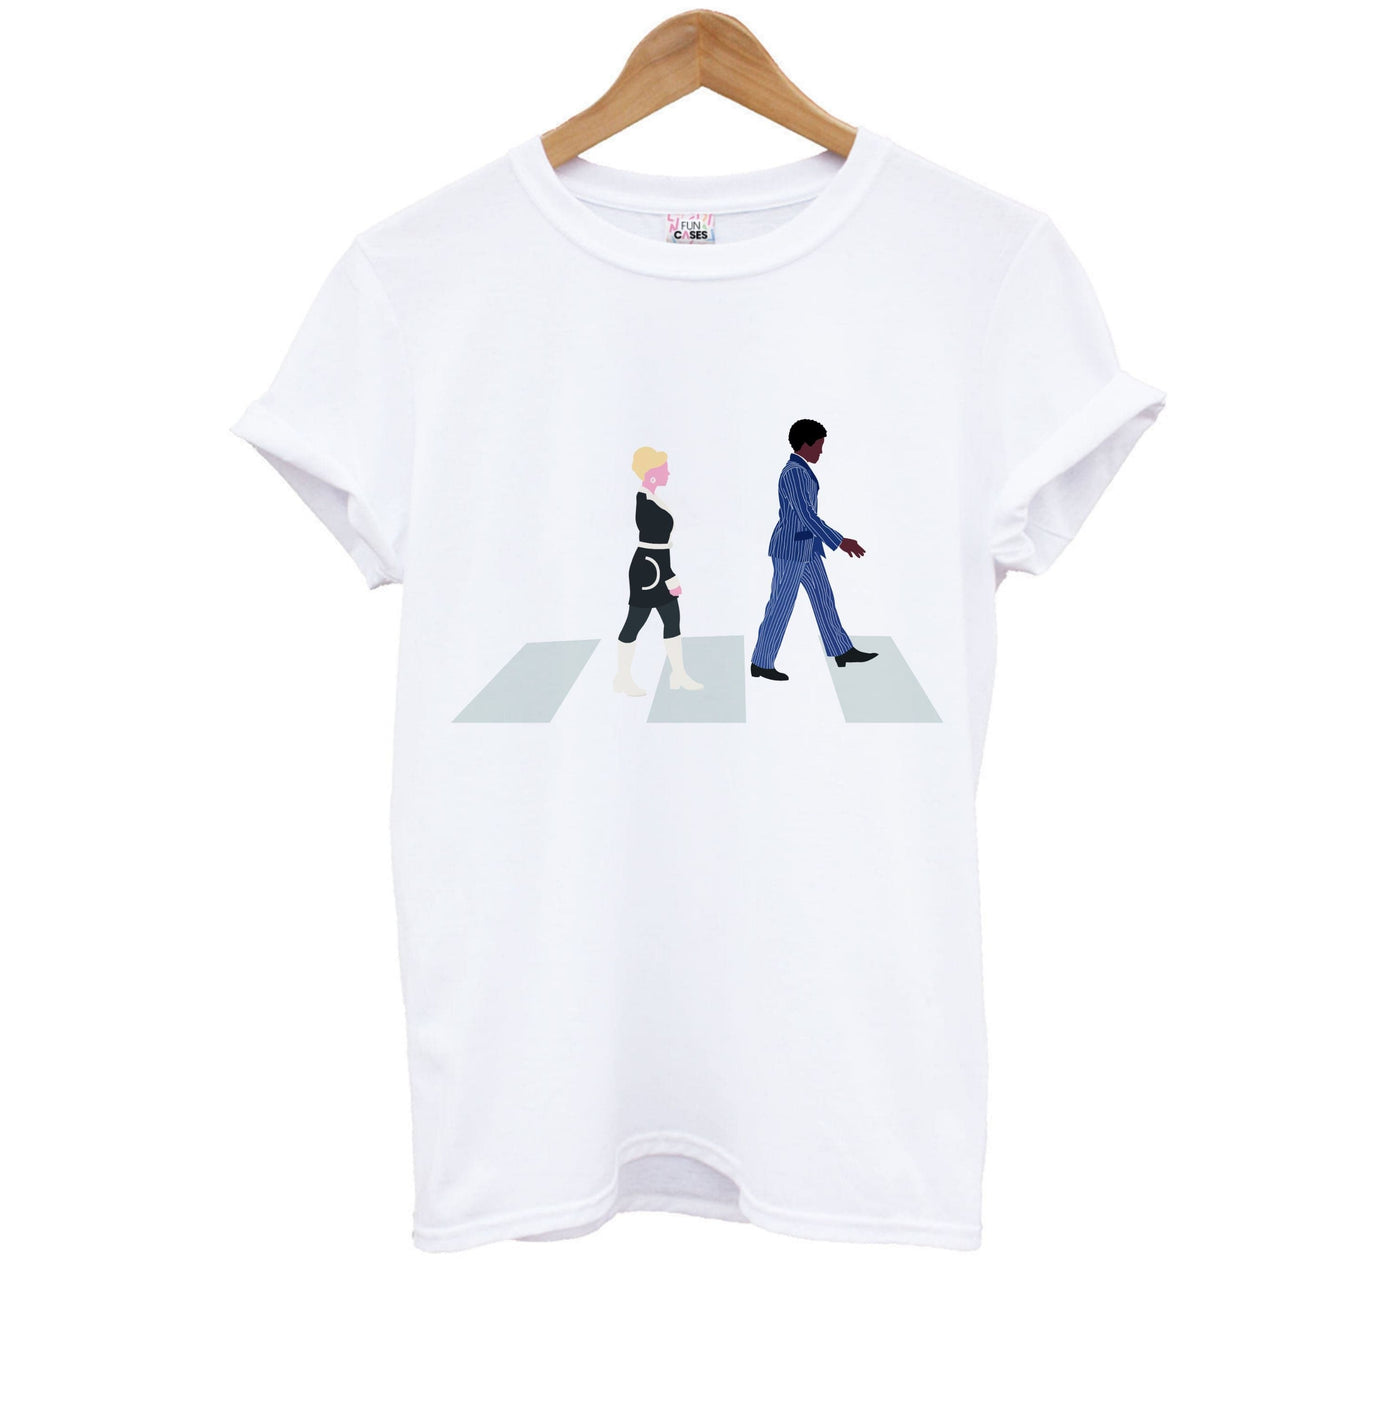 Music Walk - Doctor Who Kids T-Shirt